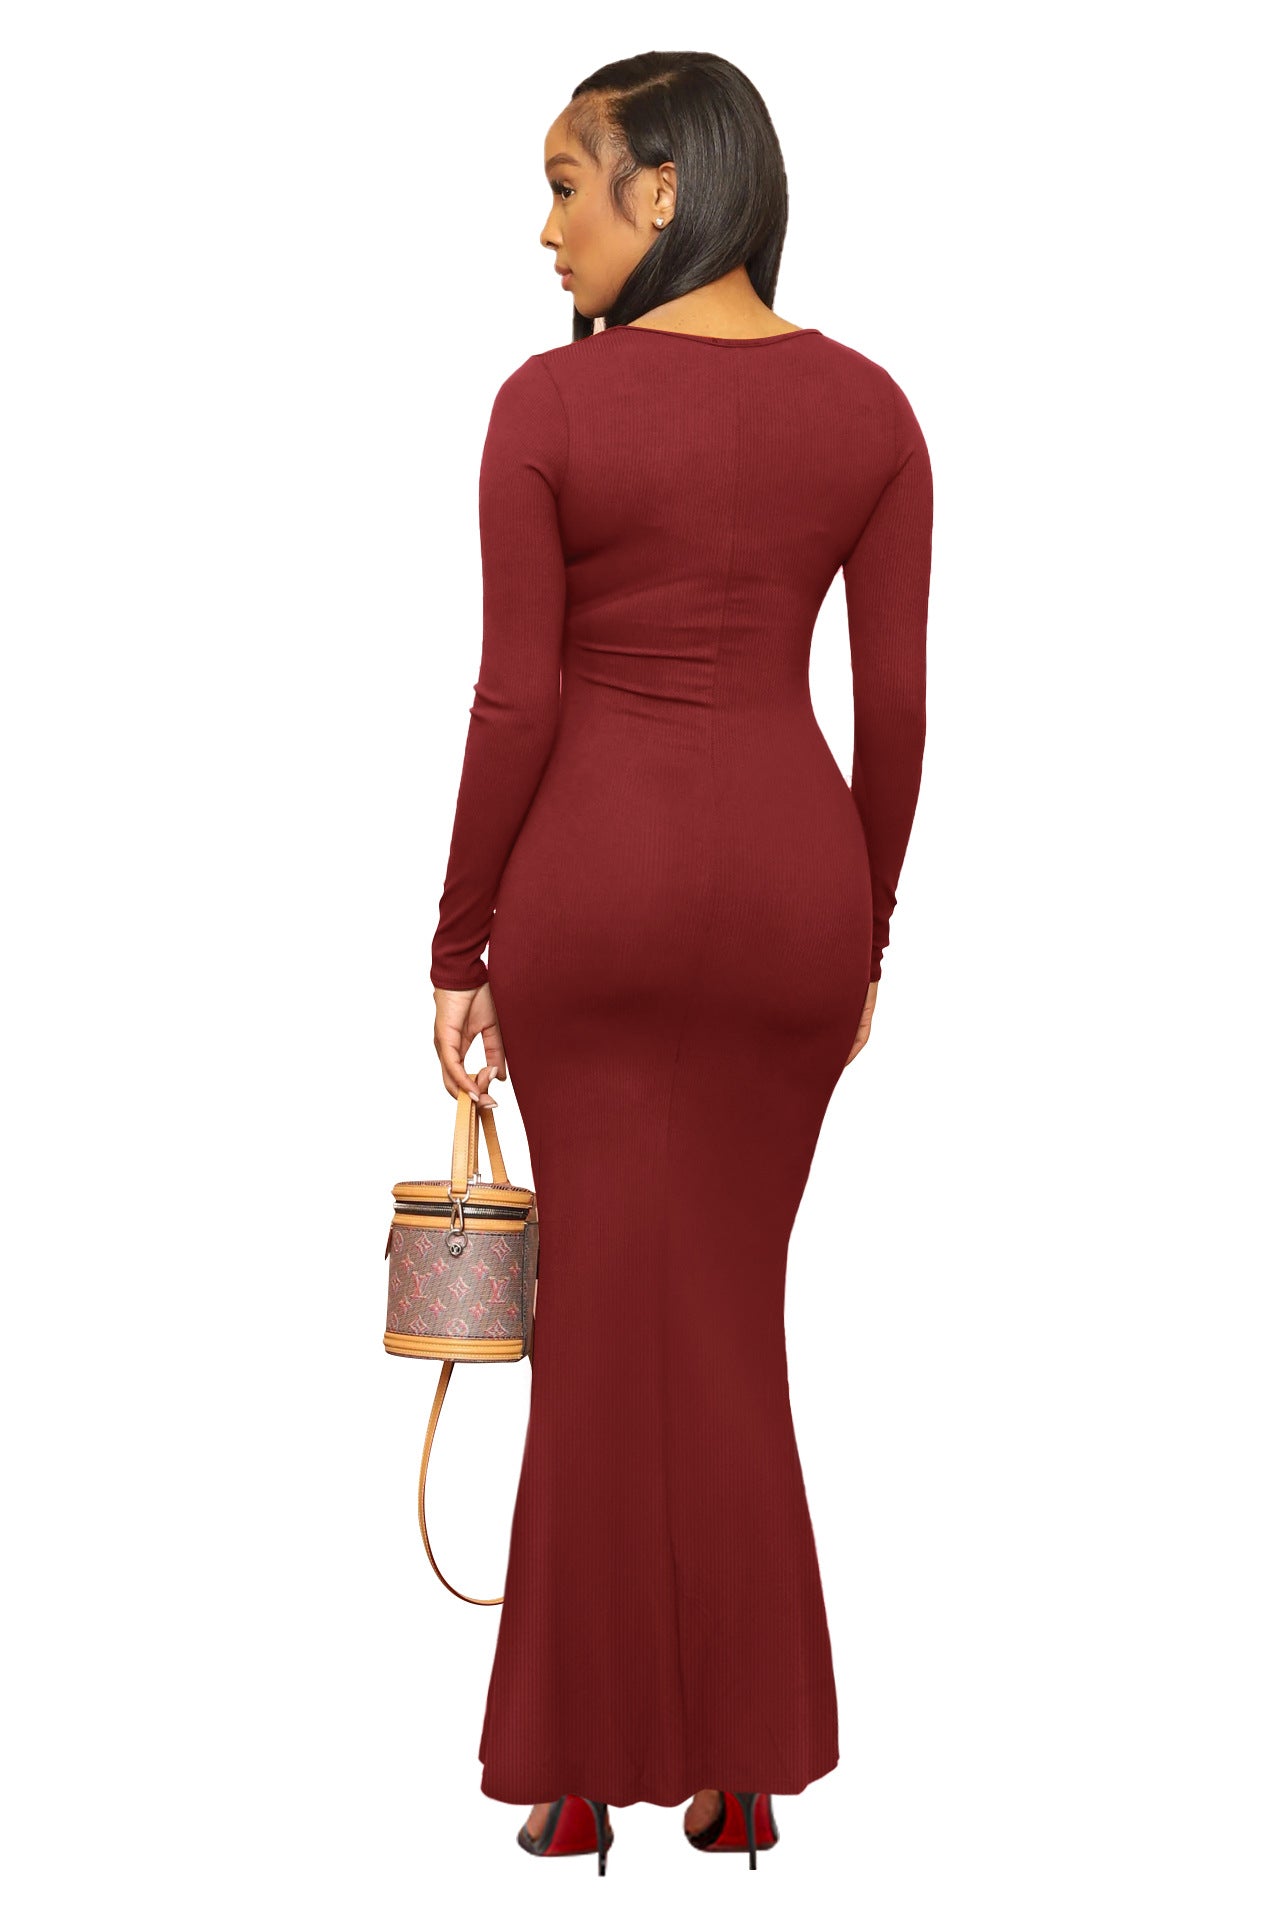 Autumn Solid Color Elegant V-neck Tight Dresses